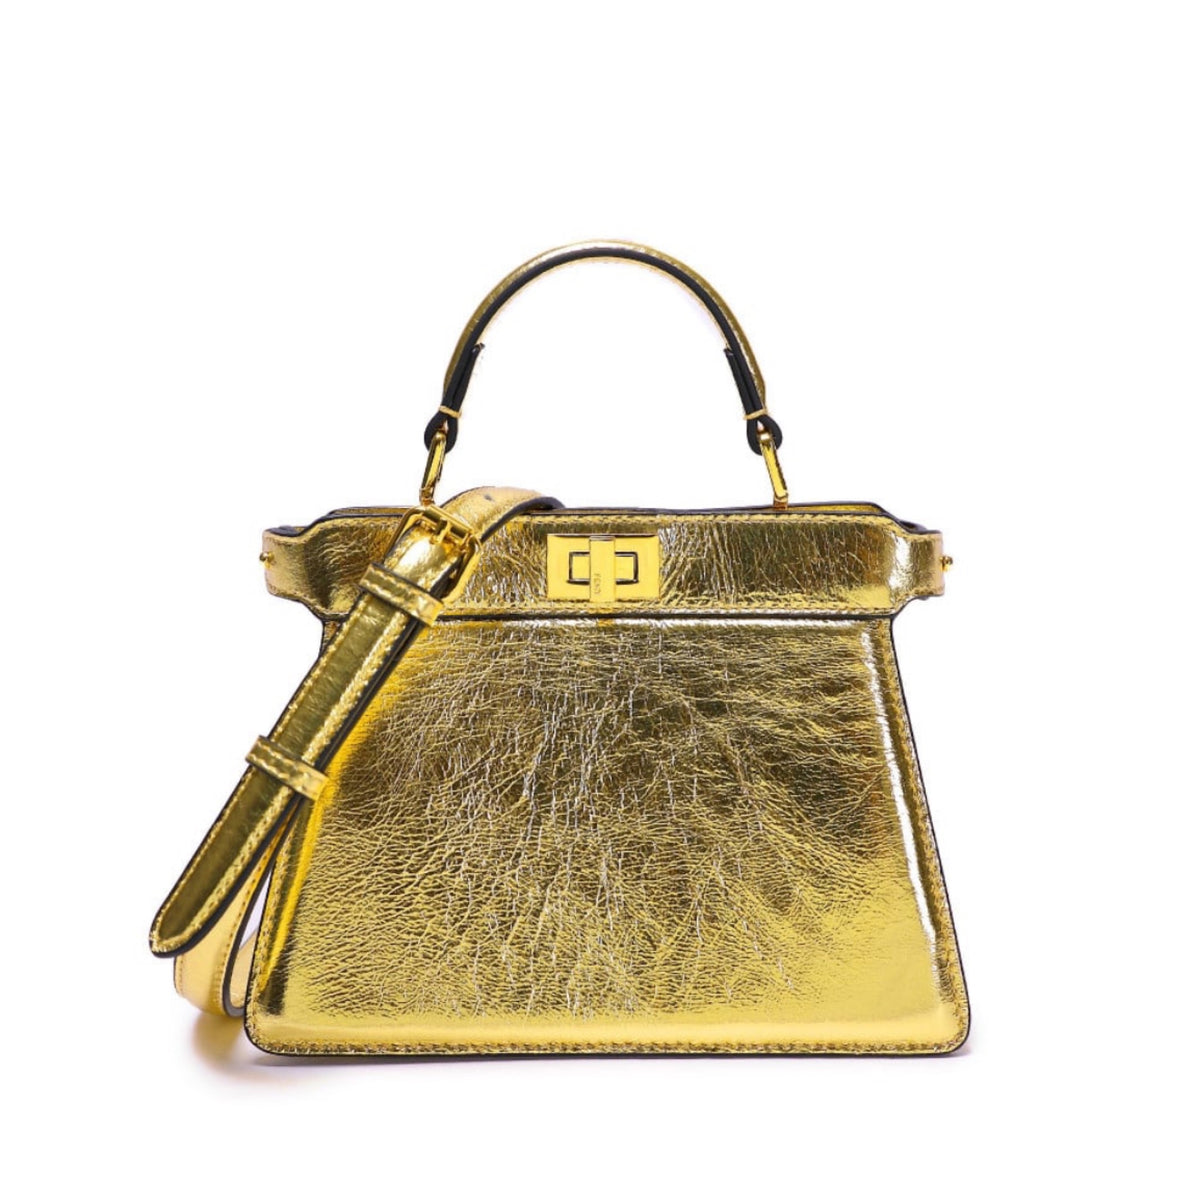 Fendi Peekaboo Gold Leather Bag